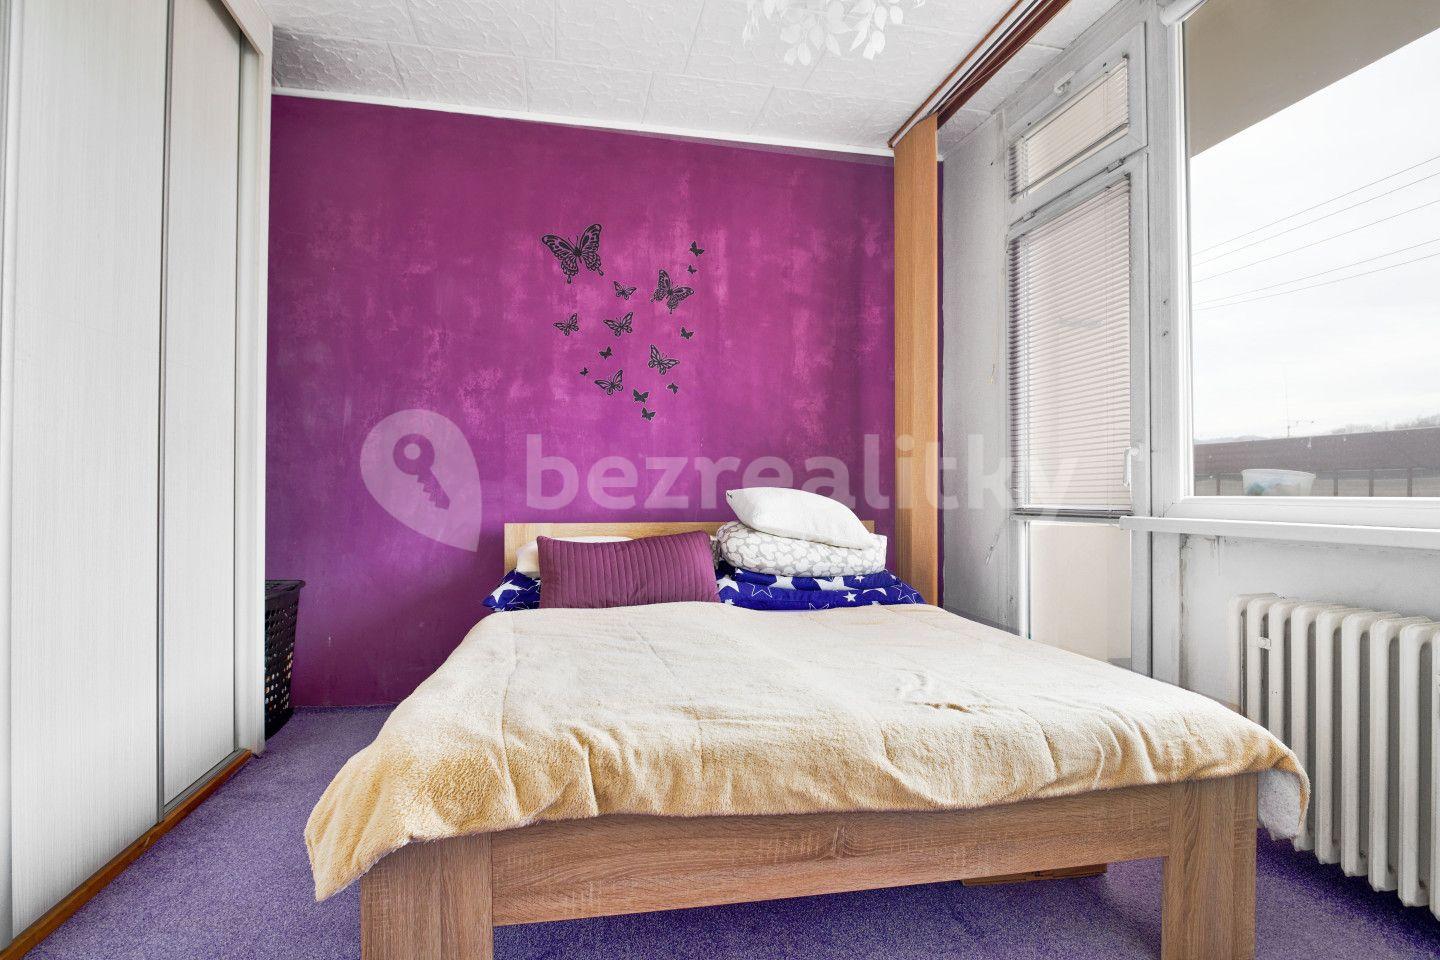 3 bedroom flat for sale, 76 m², Sibiřská, Ústí nad Labem, Ústecký Region